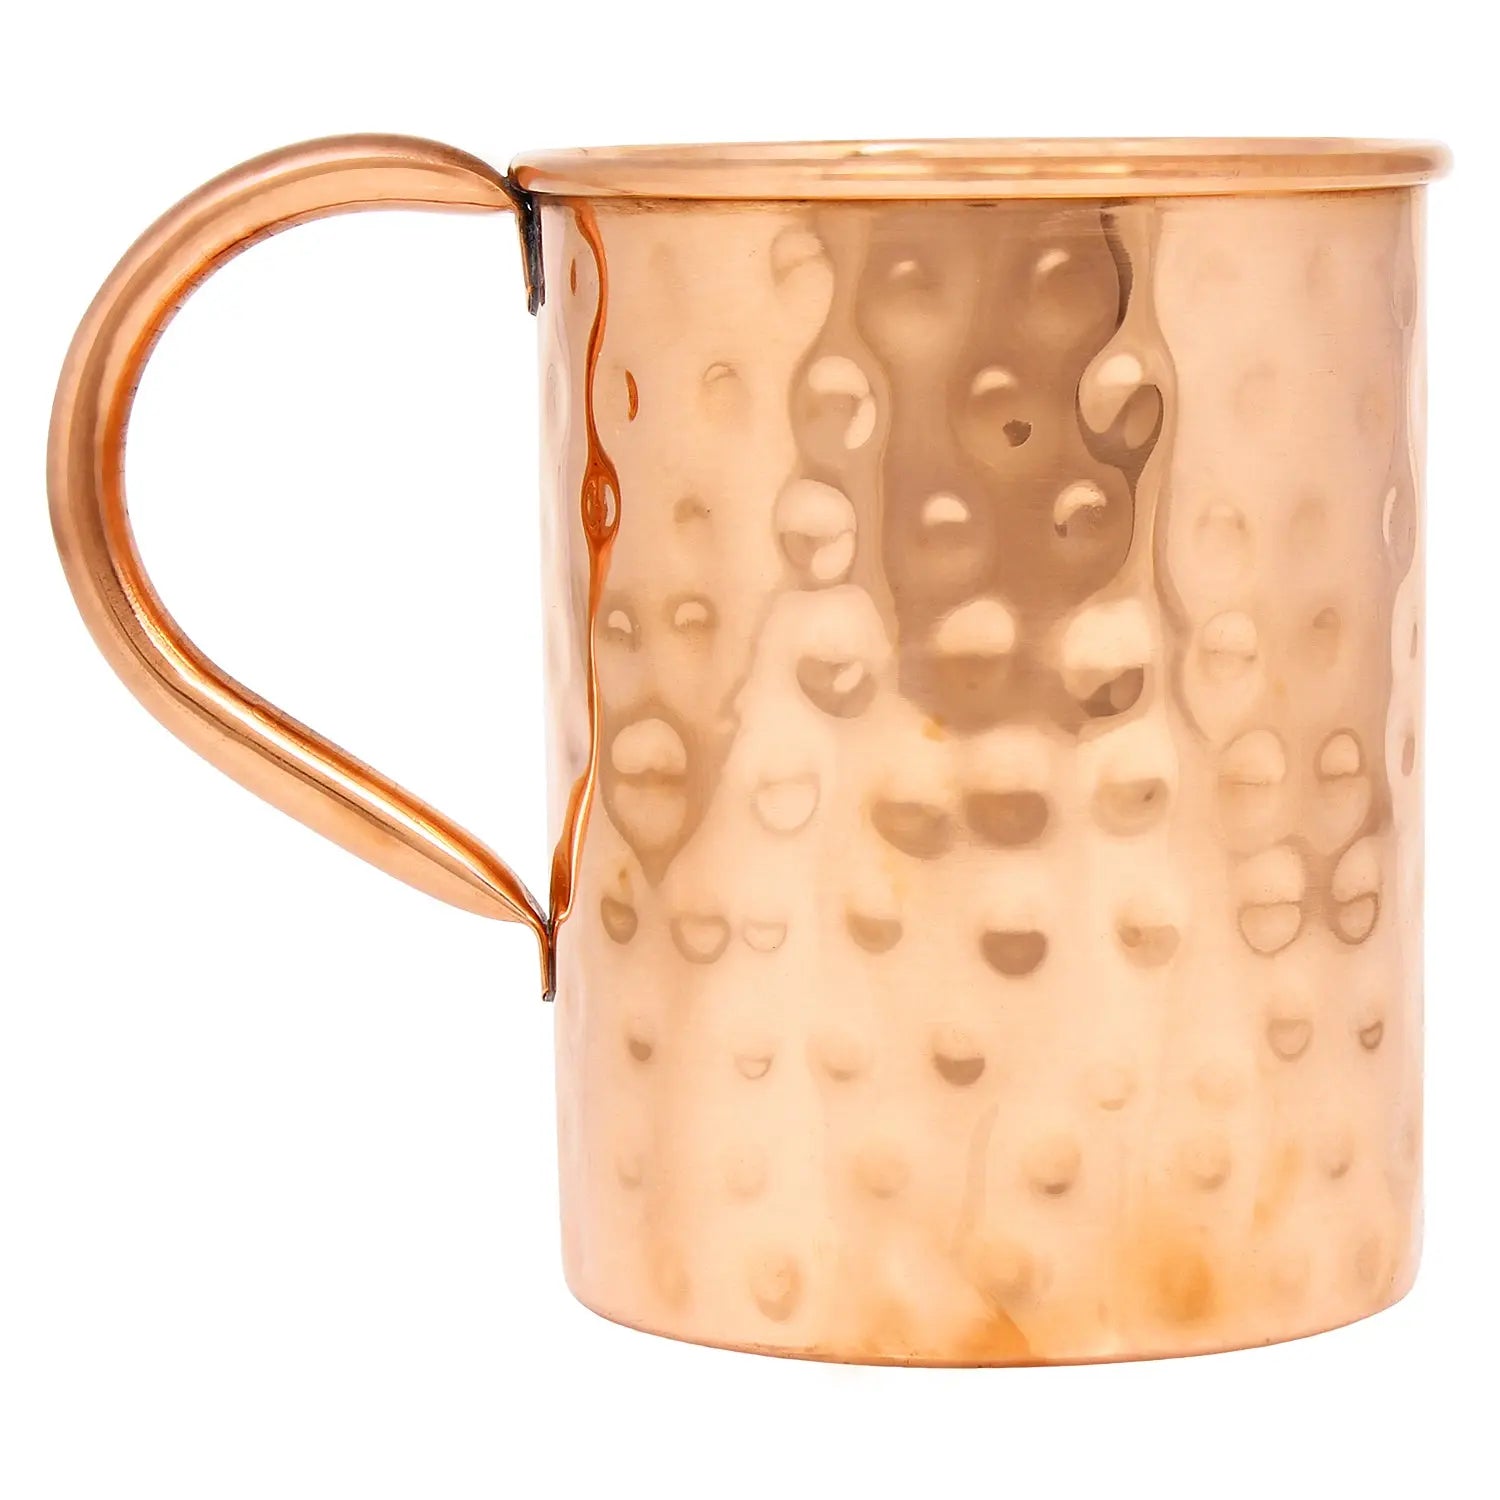 Crockery Wala And Company Copper Hammered Glass Mug Cup Copper Glass Tumbler, Mug With Handle 400 ML, 1 Pc - CROCKERY WALA AND COMPANY 